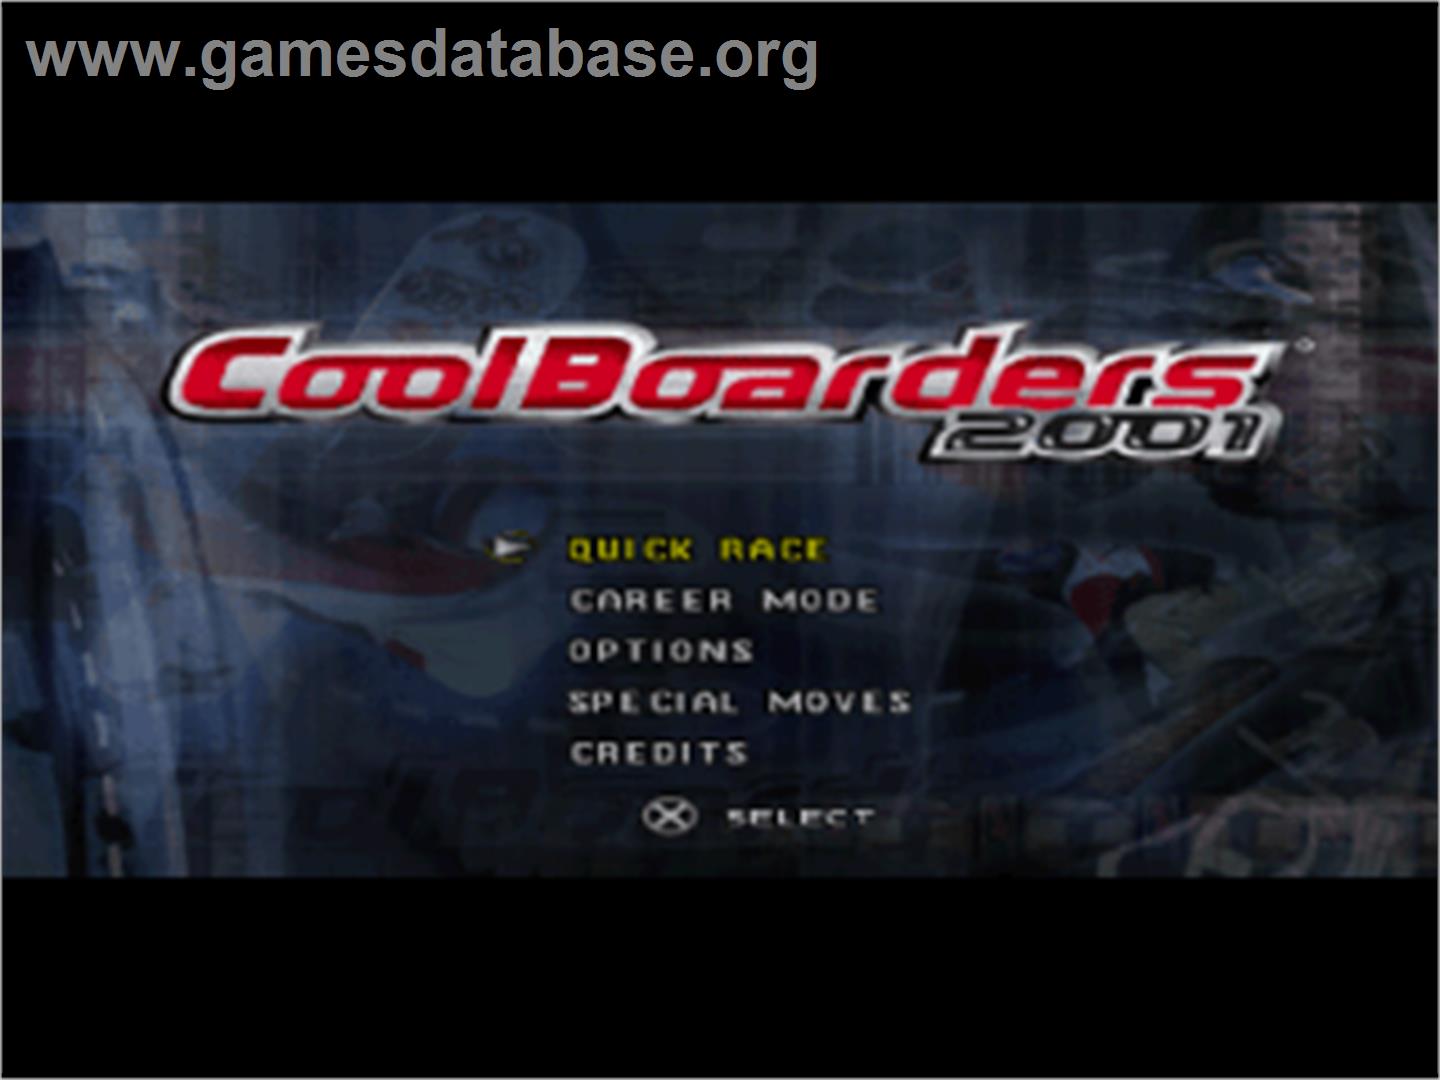 Cool Boarders 2001 - Sony Playstation - Artwork - Title Screen